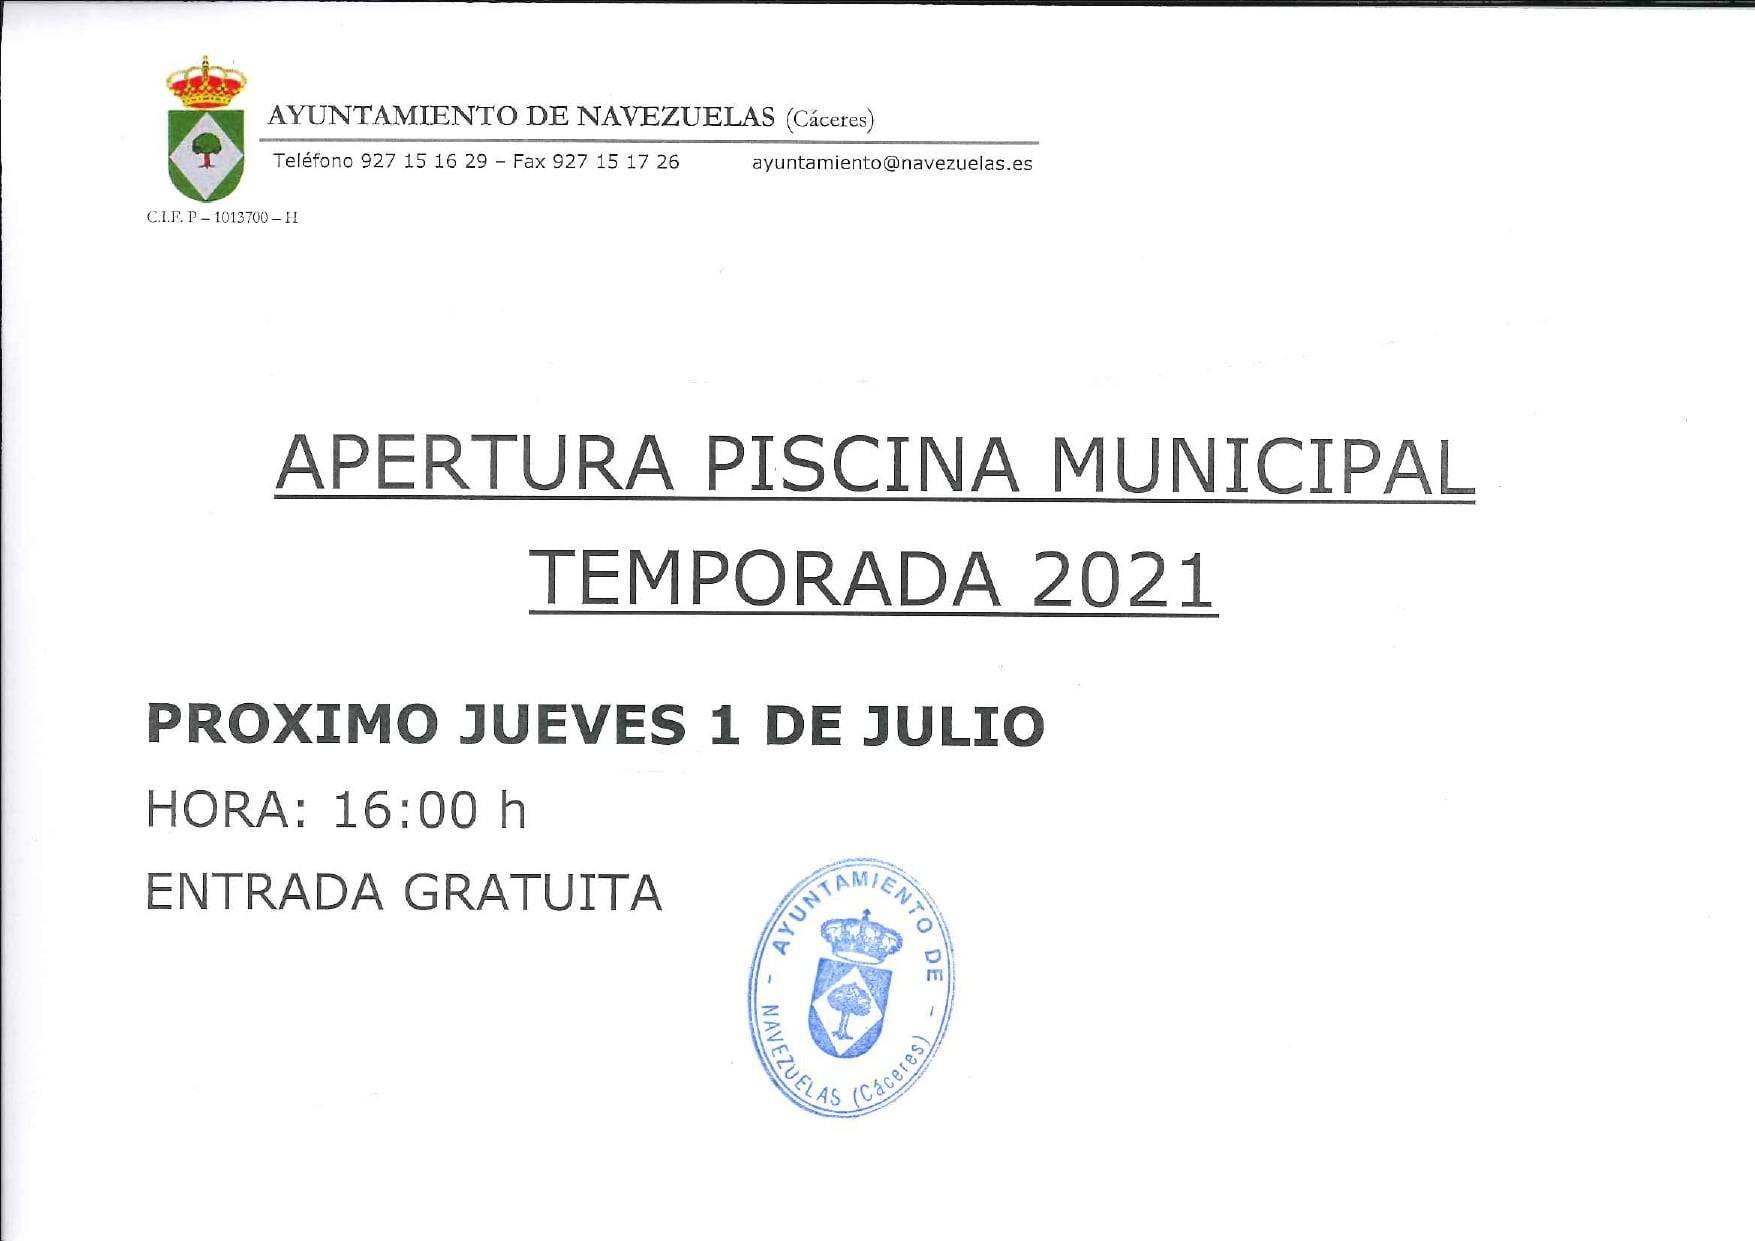 Apertura de la piscina municipal (2021) - Navezuelas (Cáceres)